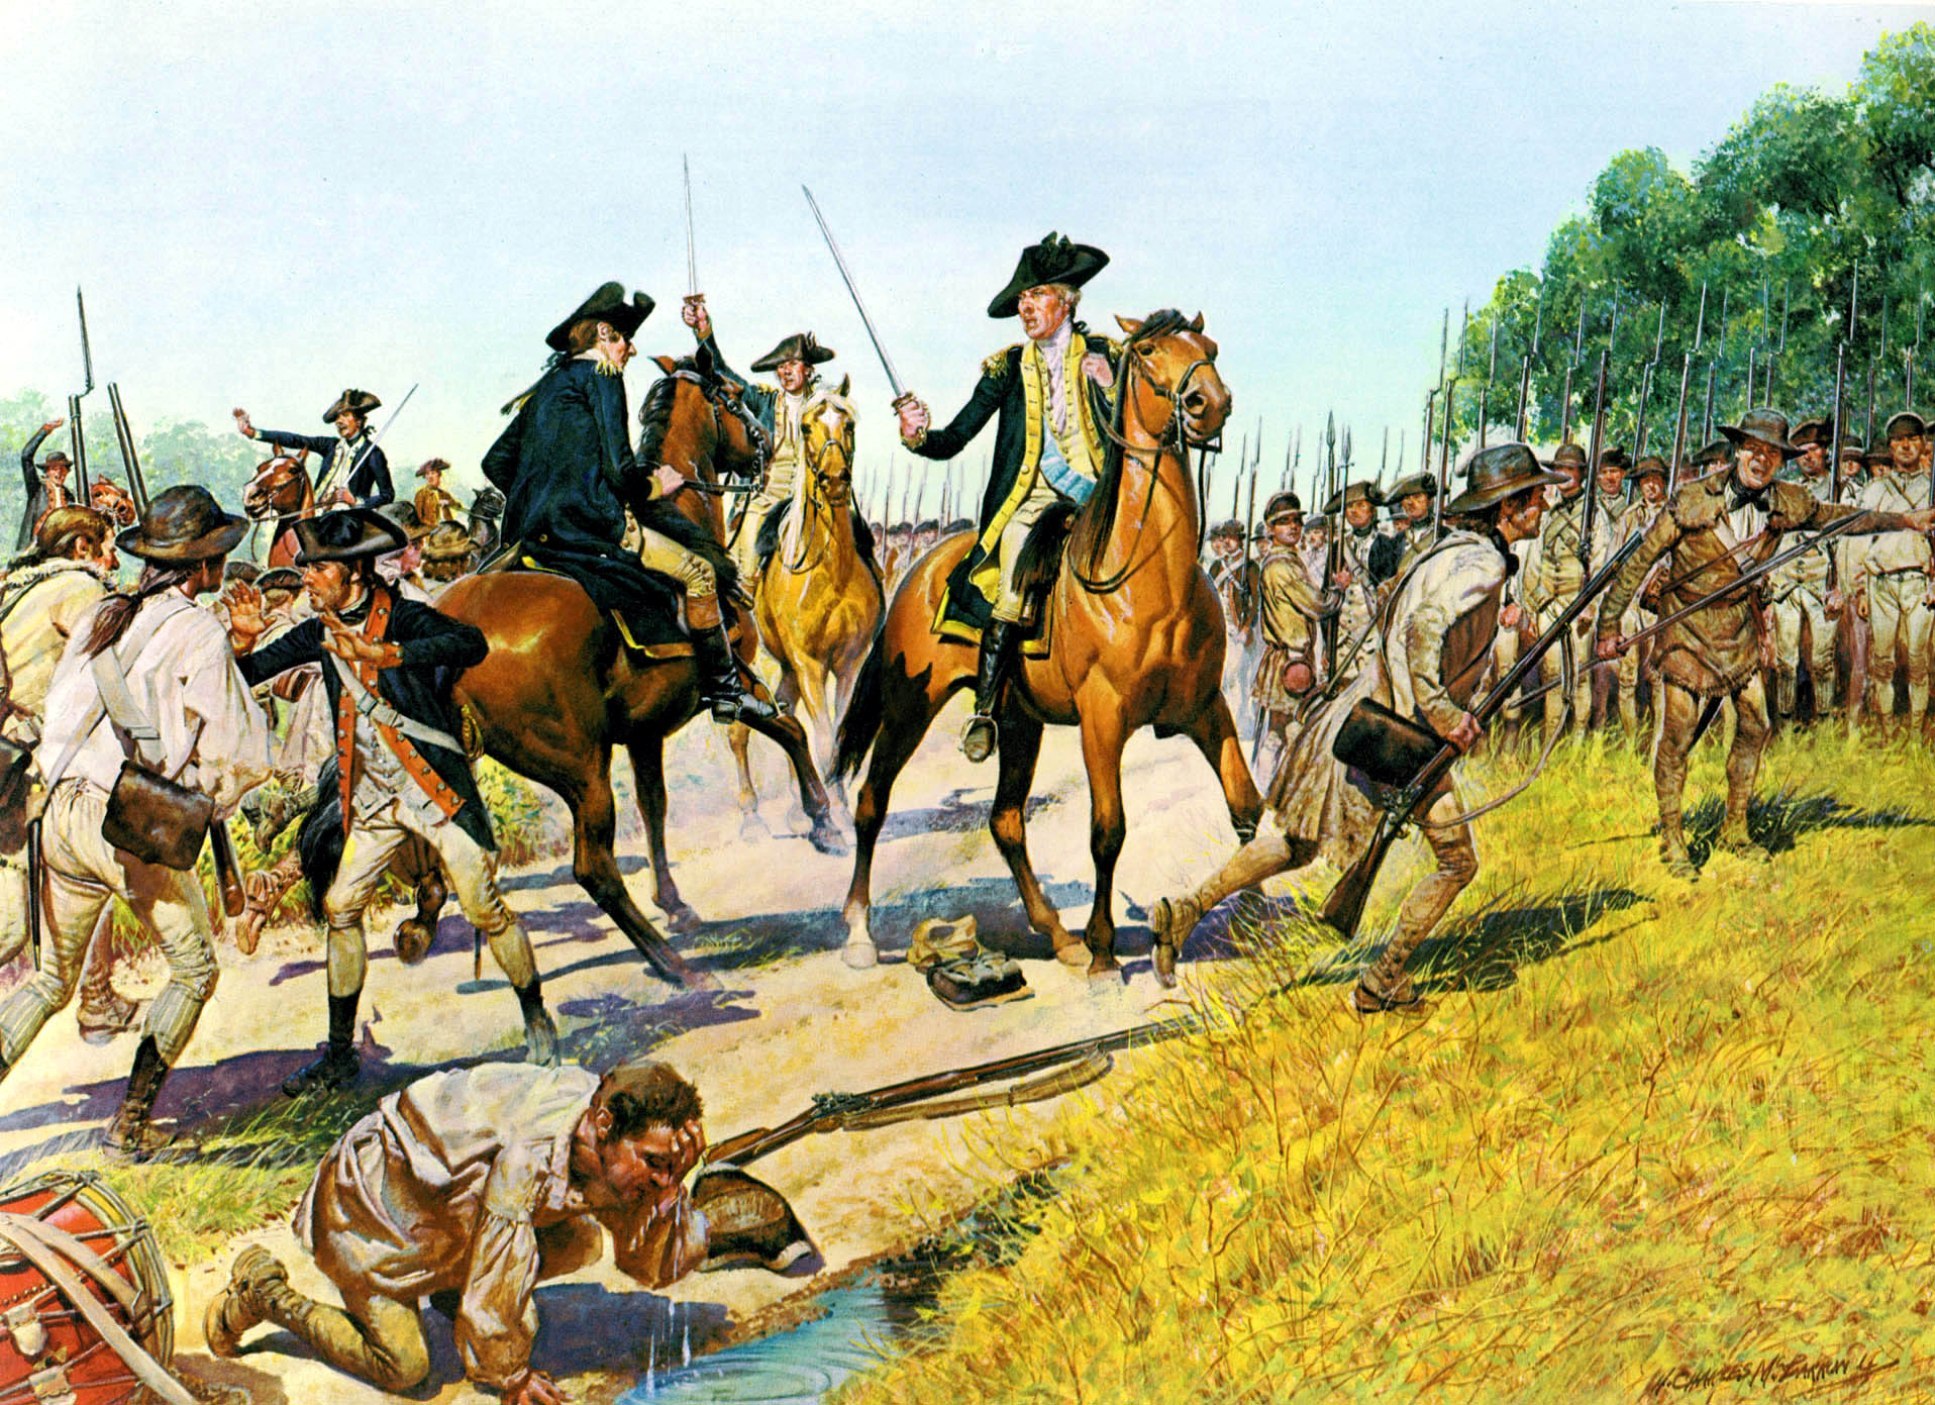 Д англо. Битва за независимость США 18 век. Битва при Банкер-Хилле 1775.